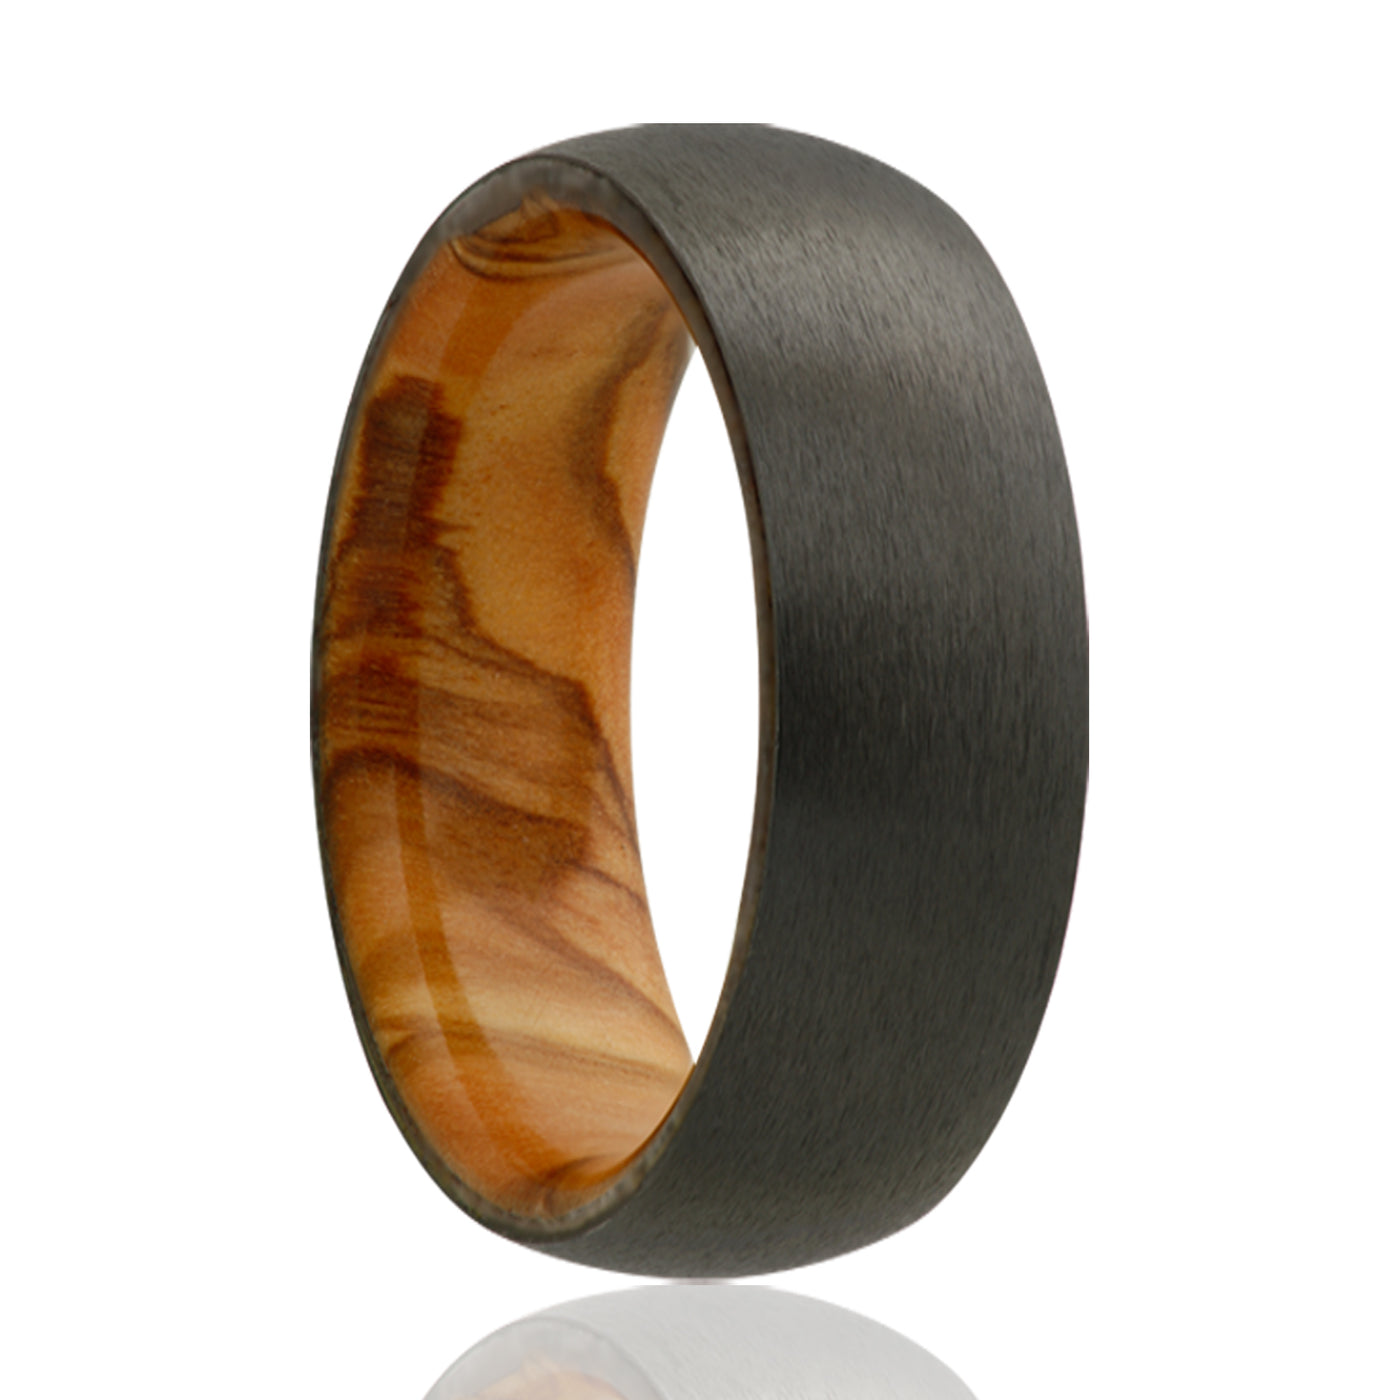 7mm Zirconium Dome satin finish wood sleeve ring